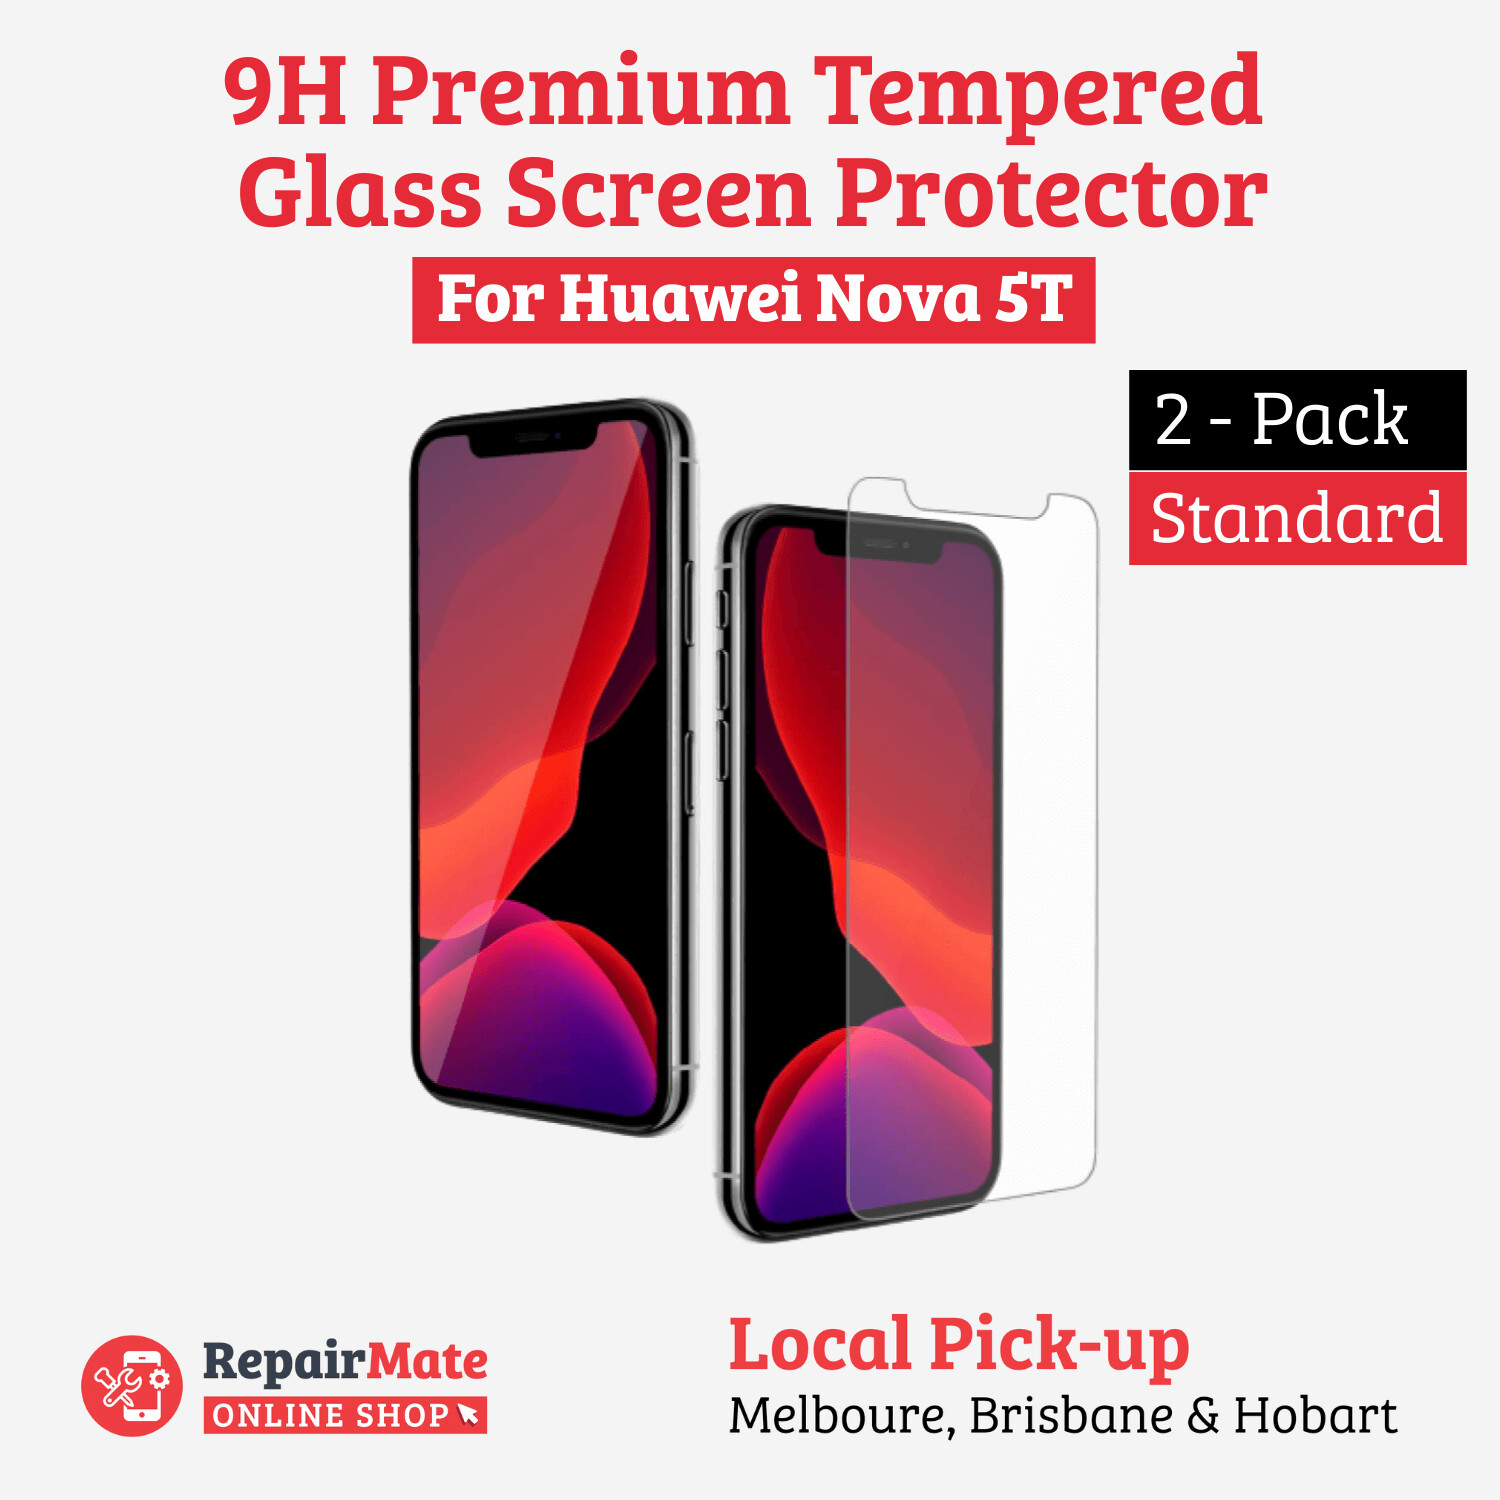 Huawei Nova 5T 9H Premium Tempered Glass Screen Protector [2 Pack]